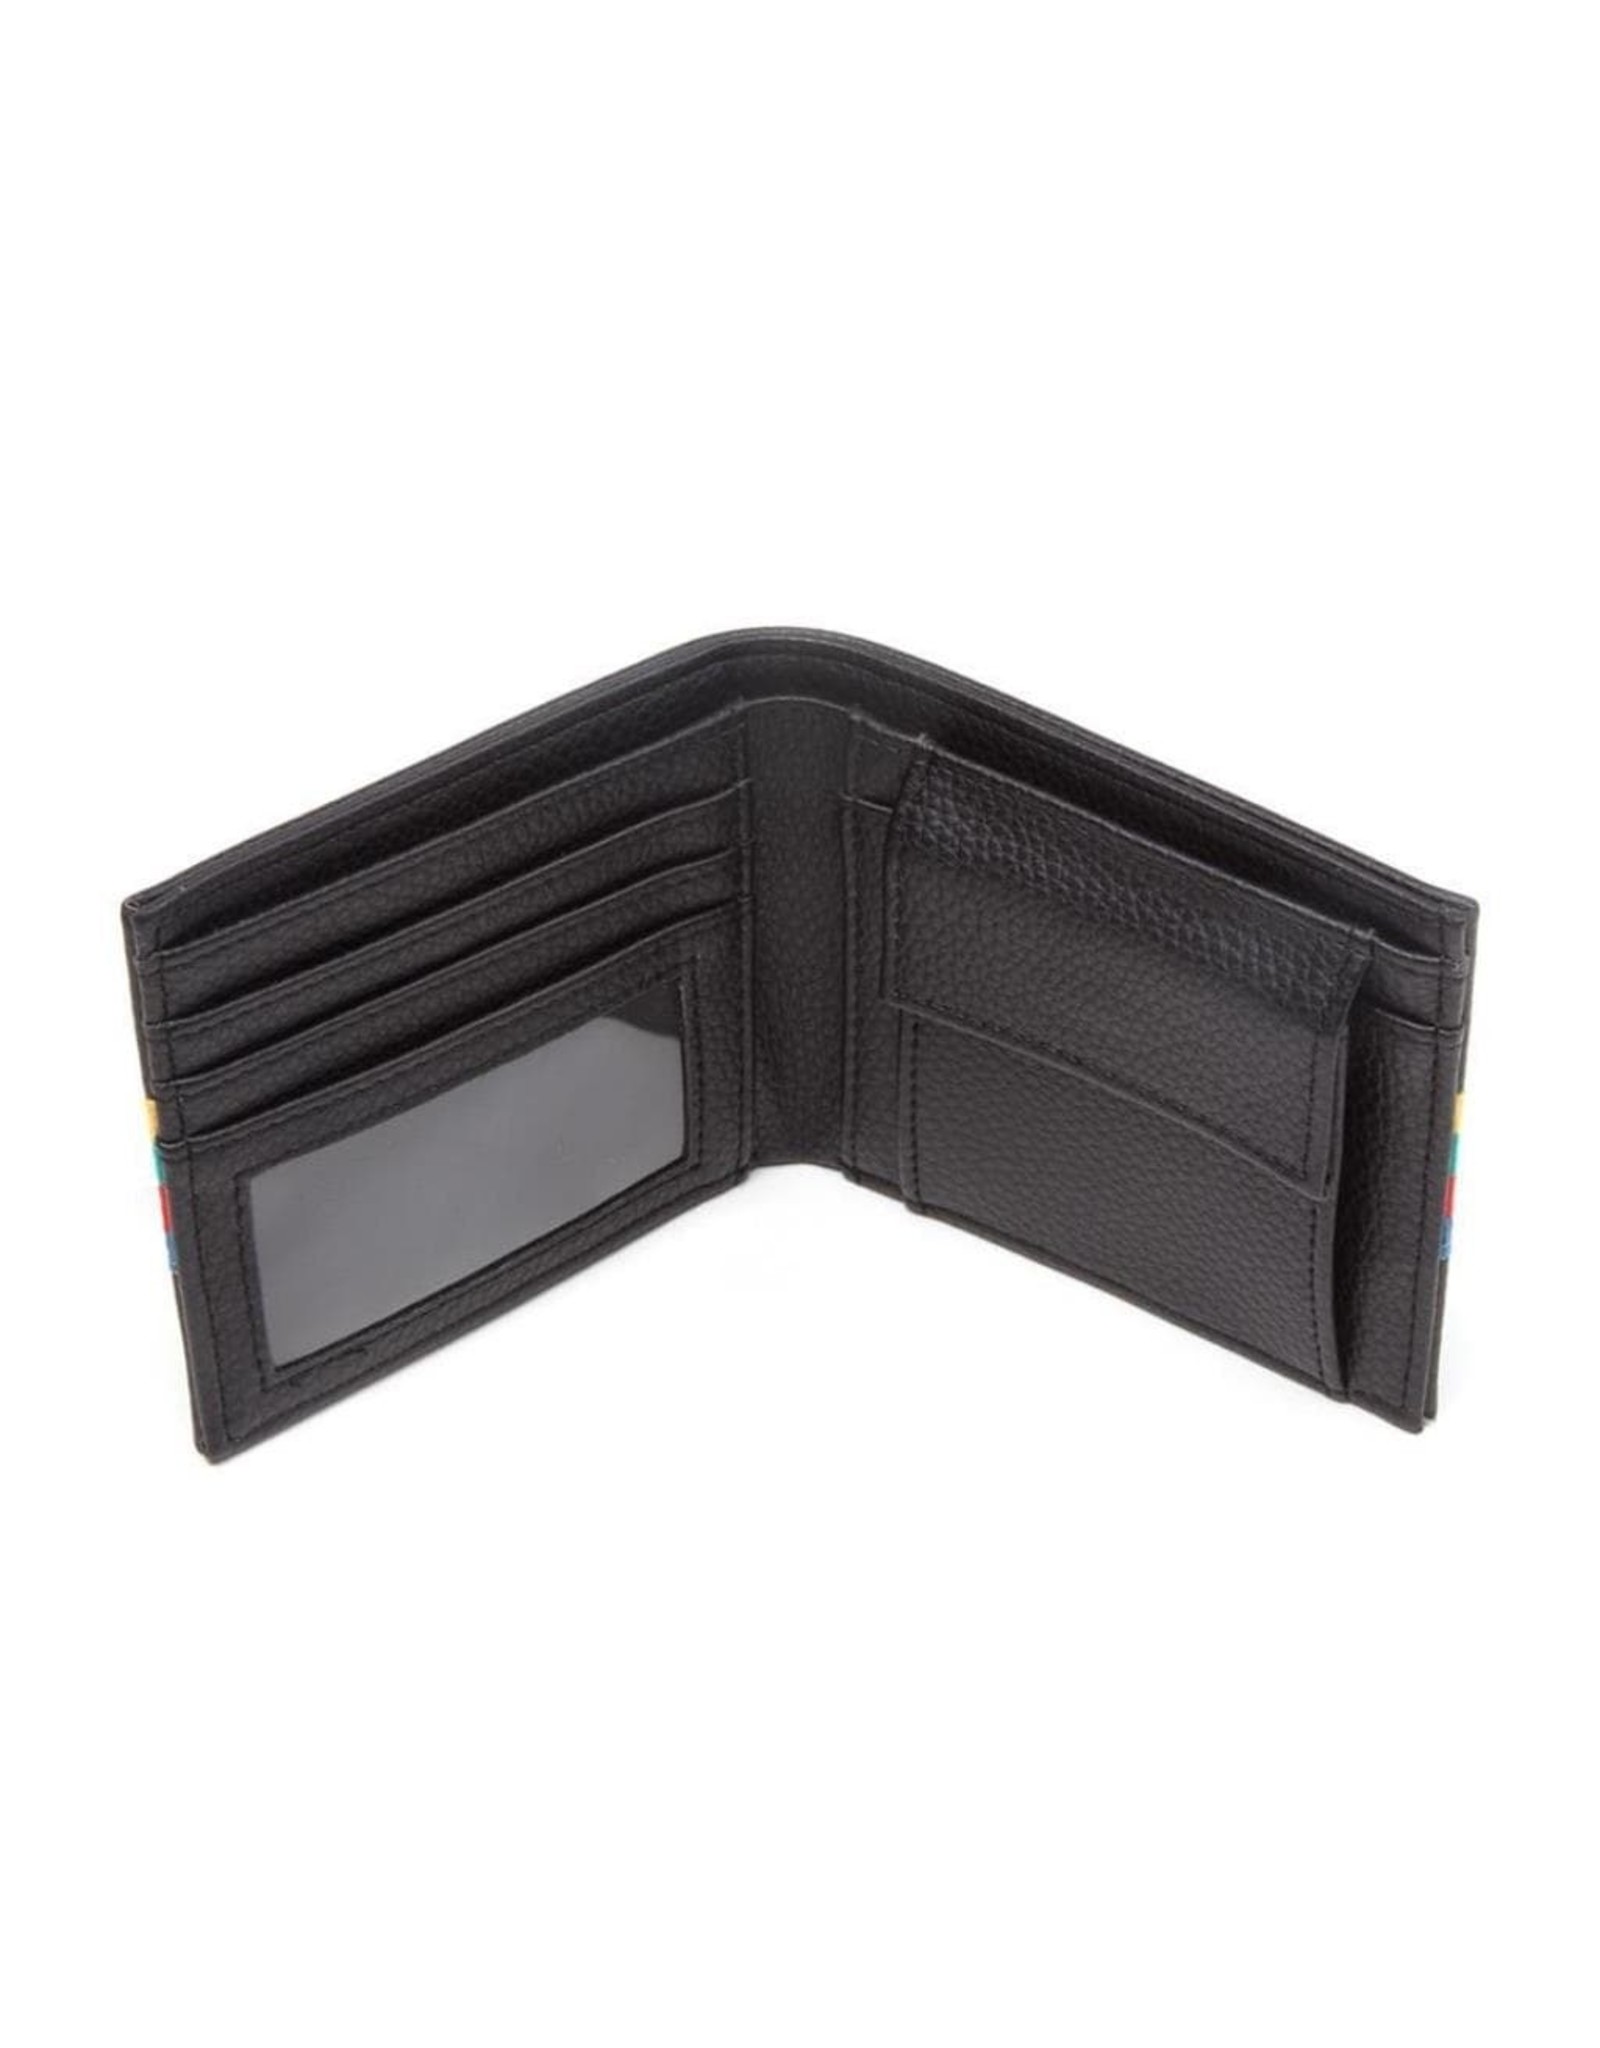 Playstation Merchandise wallets - Sony Playstation retro wallet